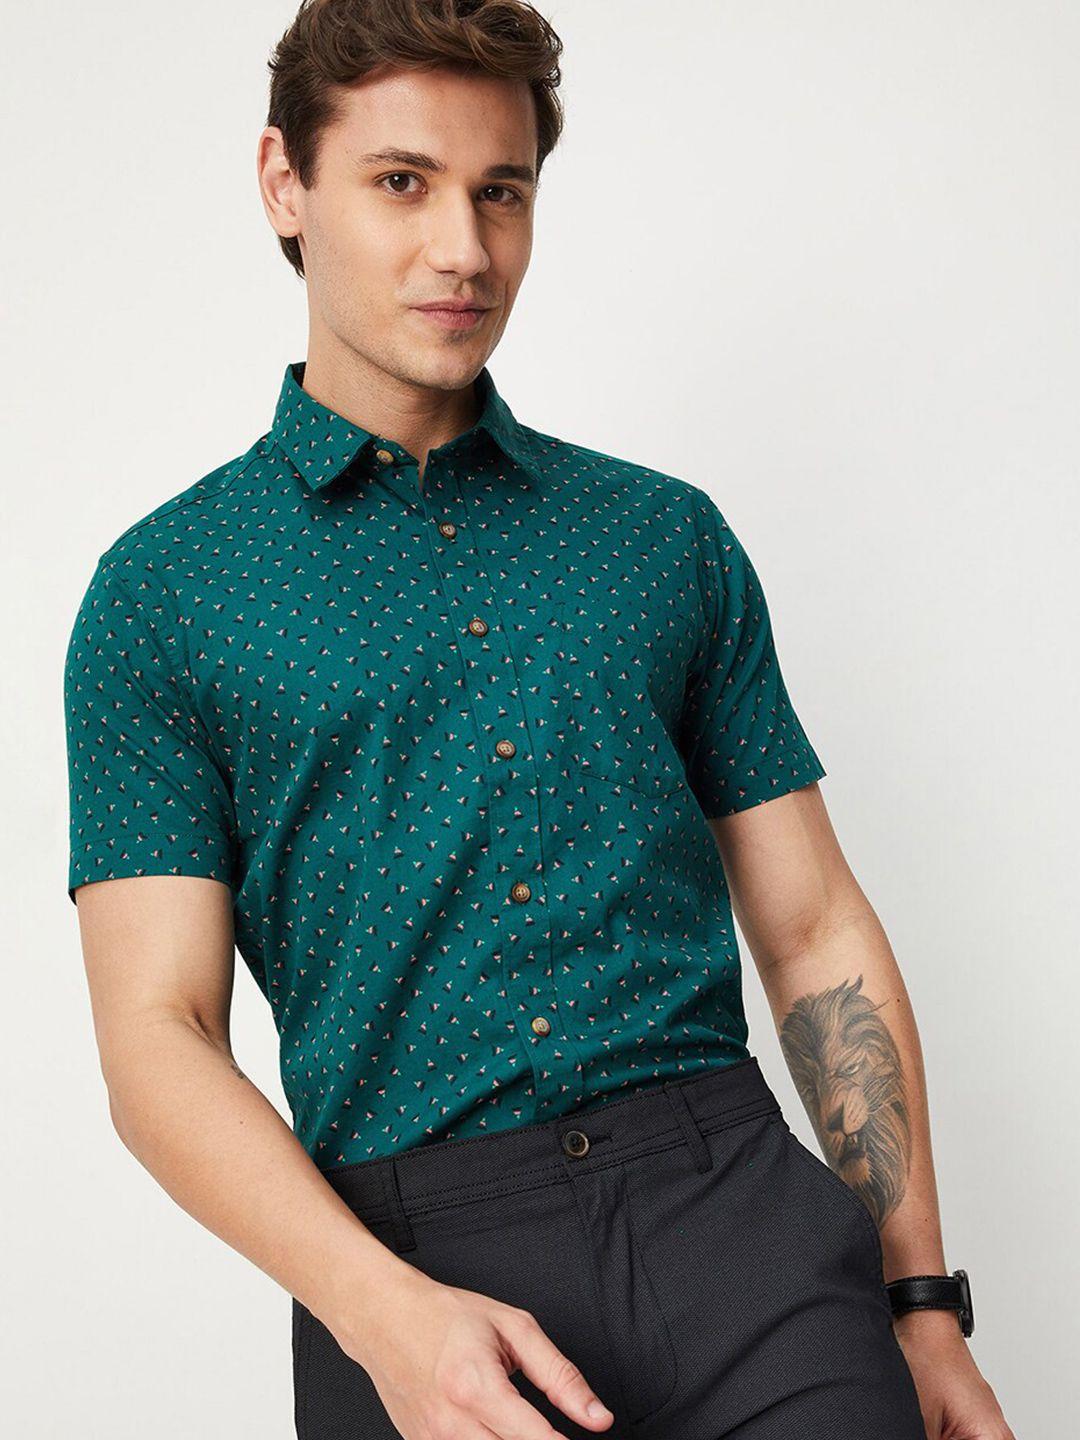 max men pure cotton regular fit casual shirt